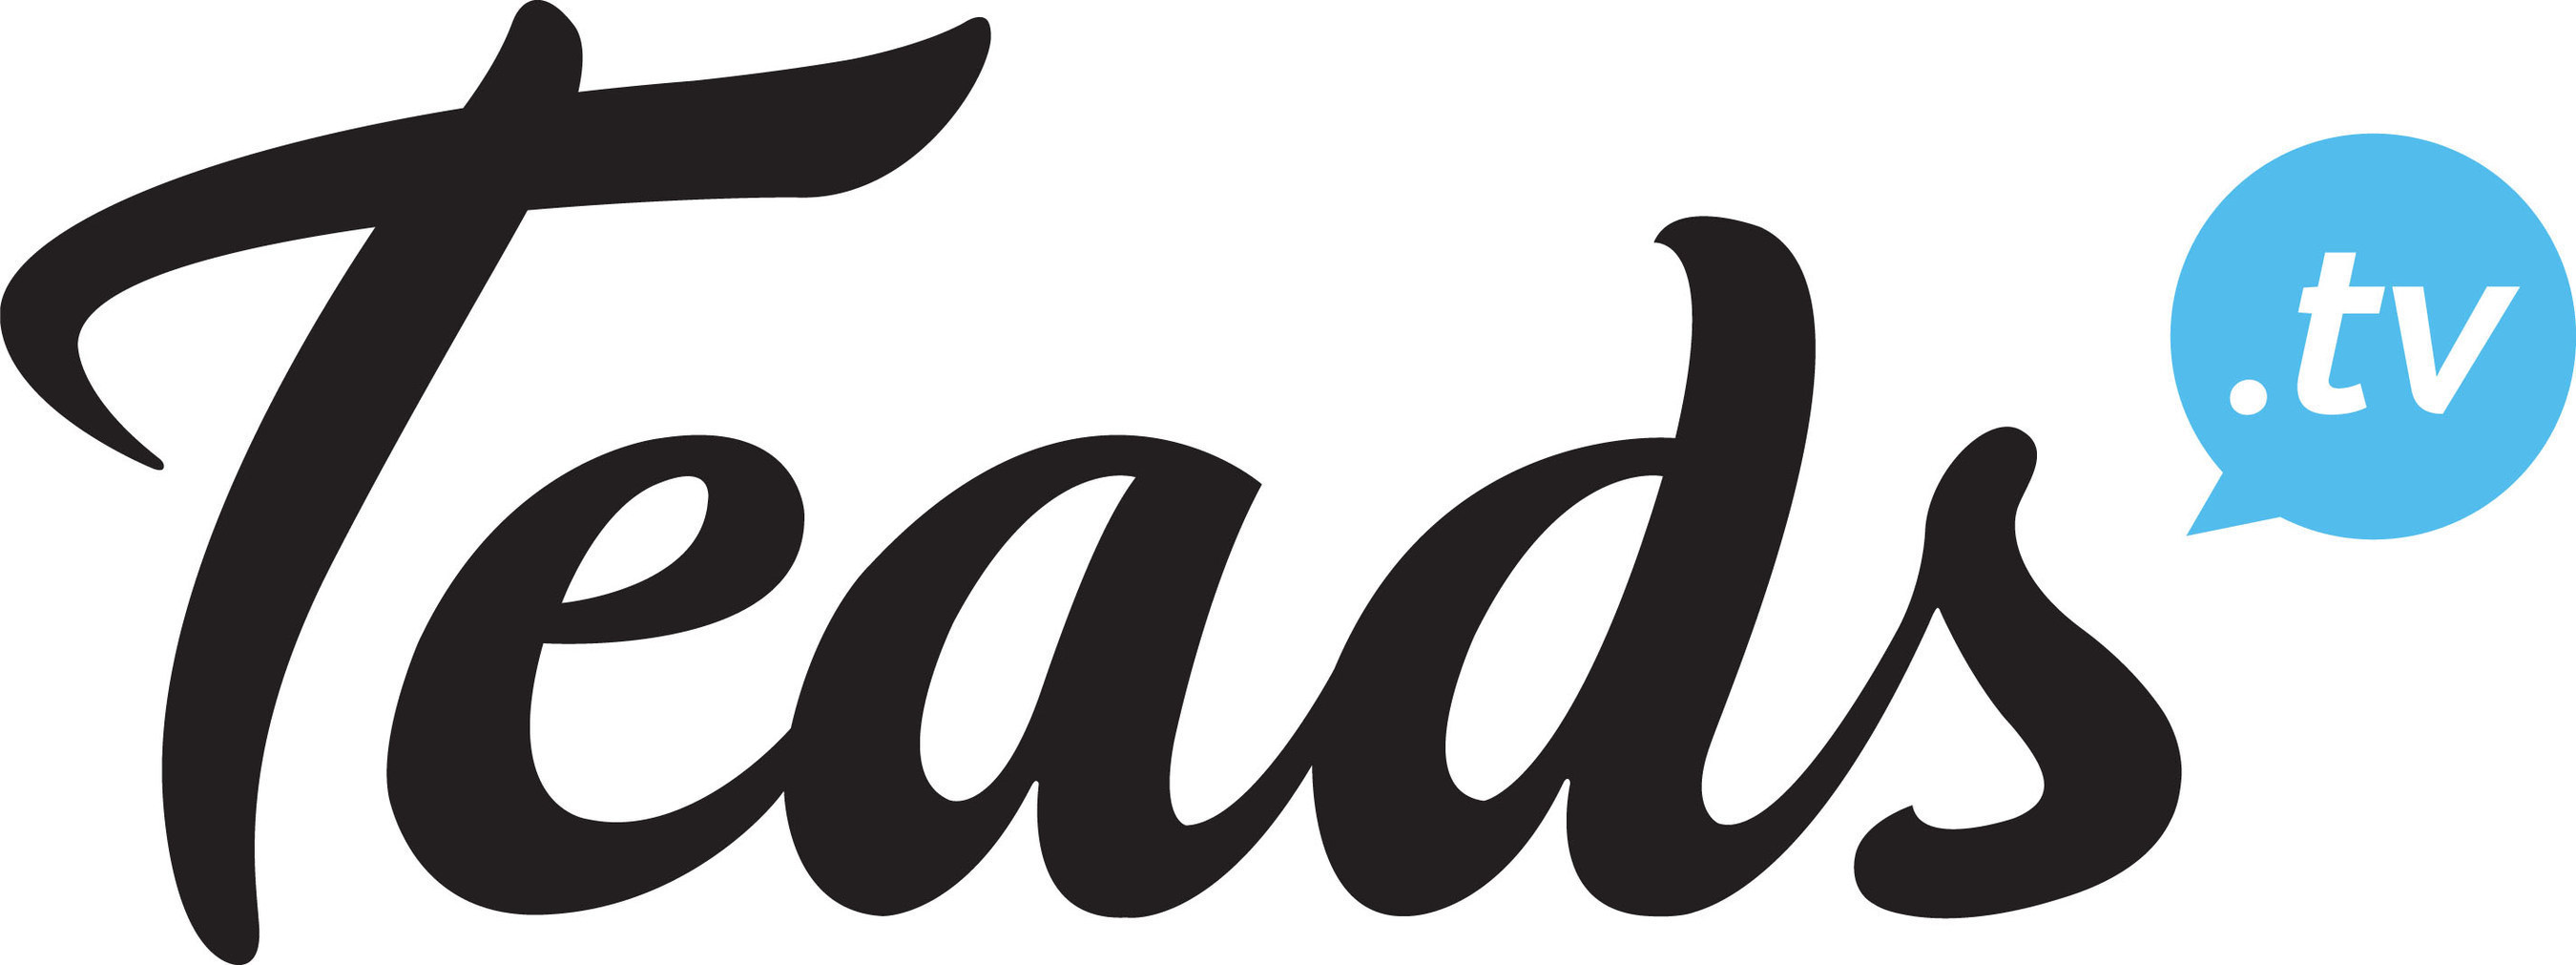 Teads logo (PRNewsFoto/Teads)